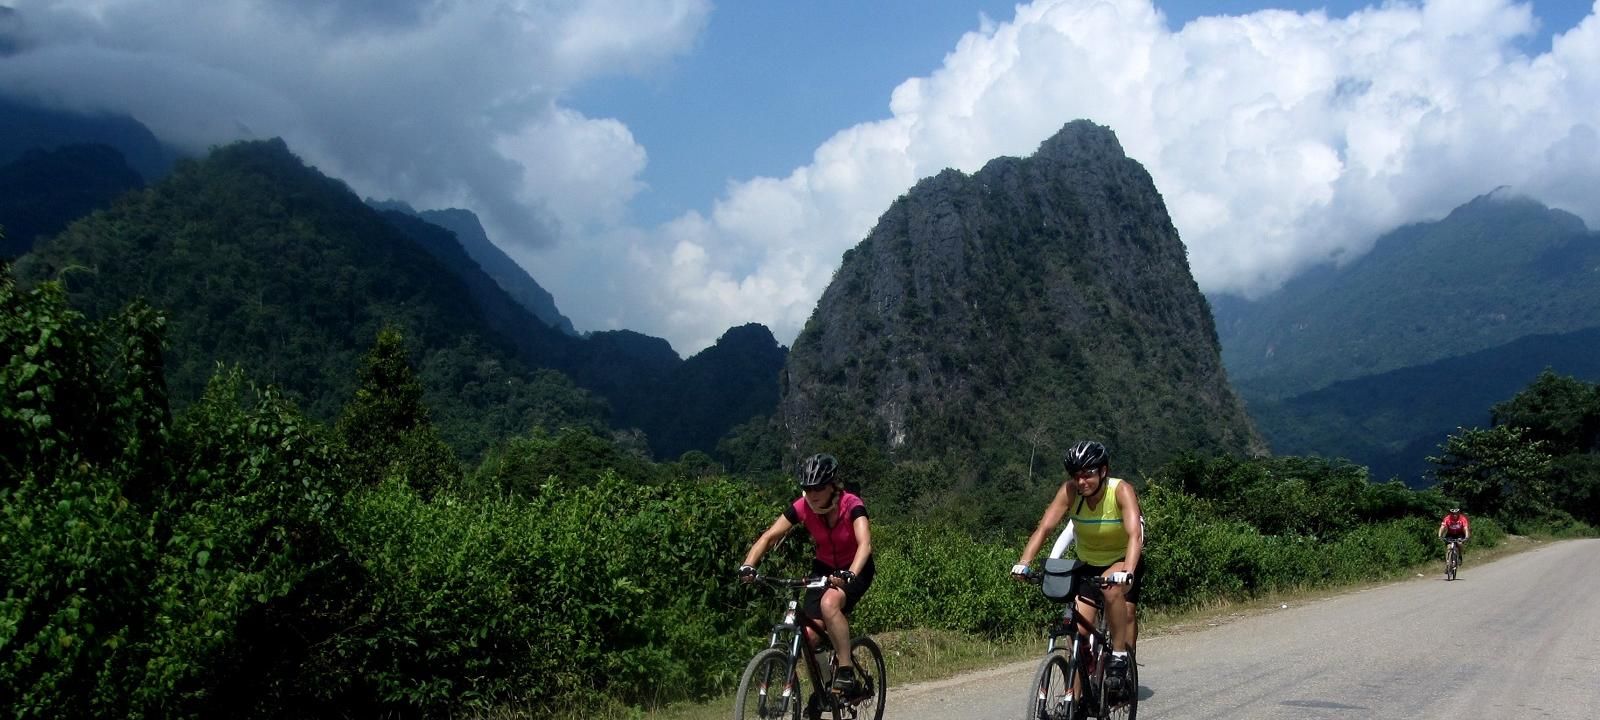 Cycling through Vietnam and Laos